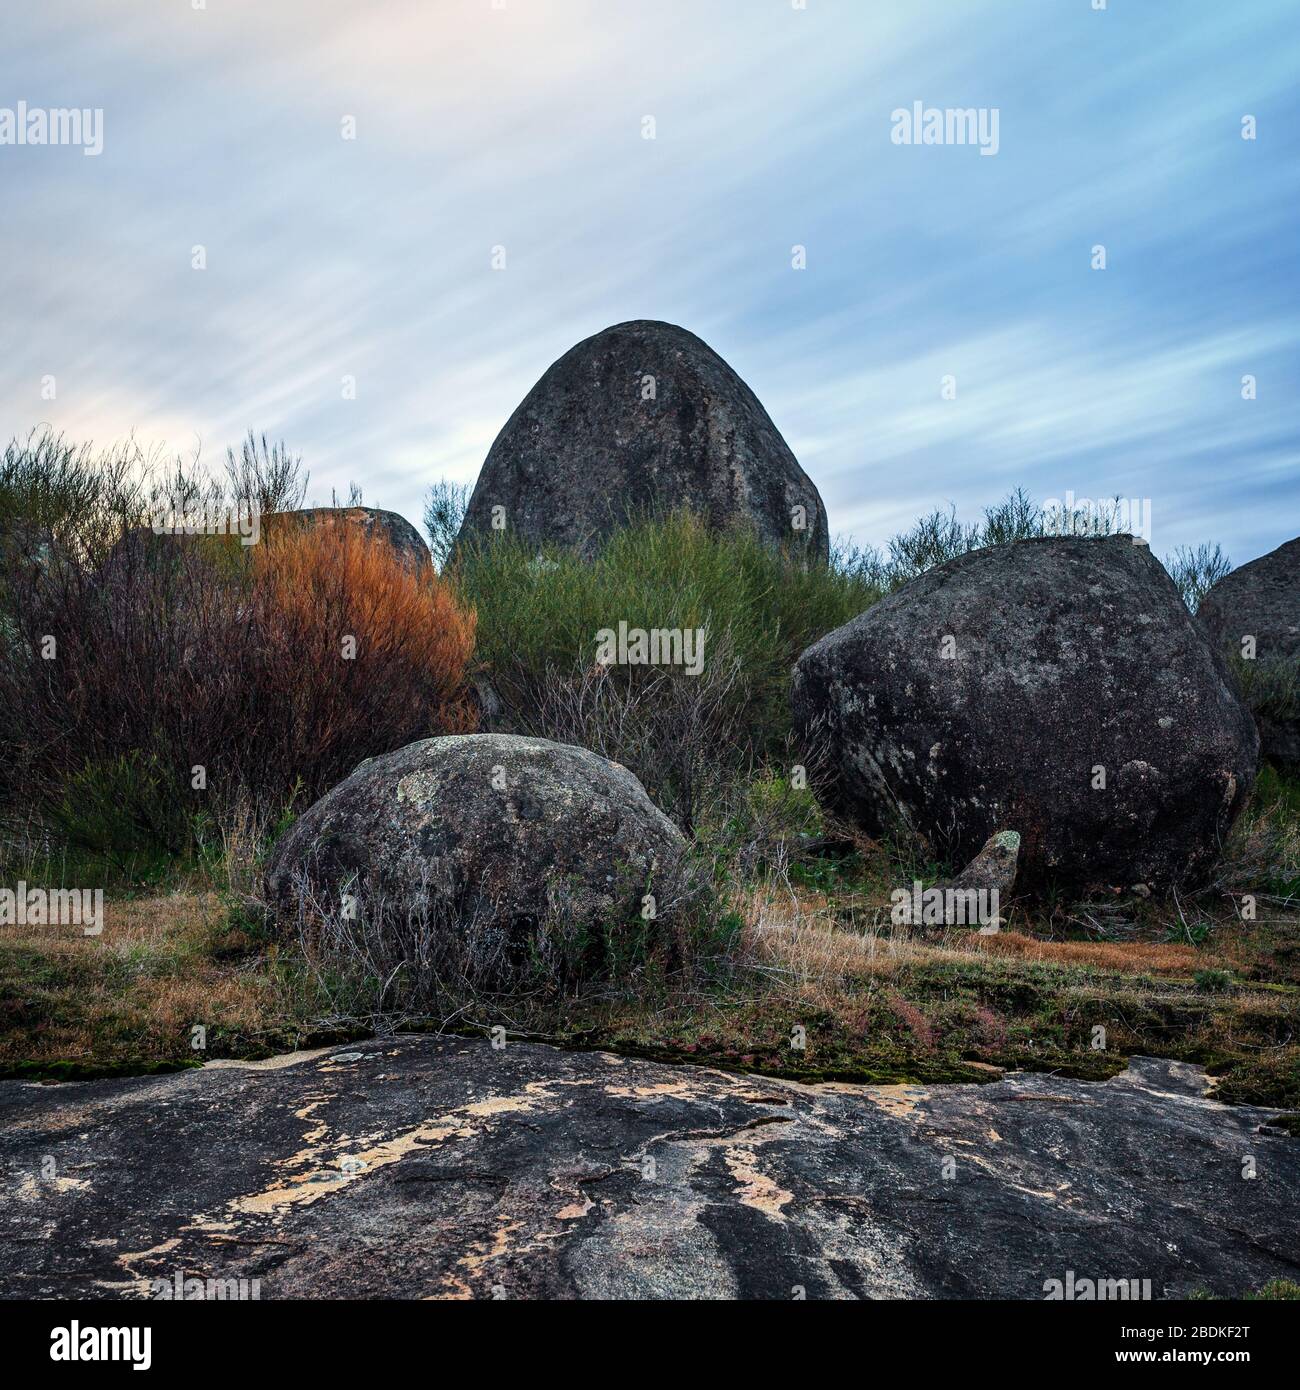 Boulders scattered on the granite rock outcrop at Boulder Rock, Karragullen, Western Australia Stock Photo